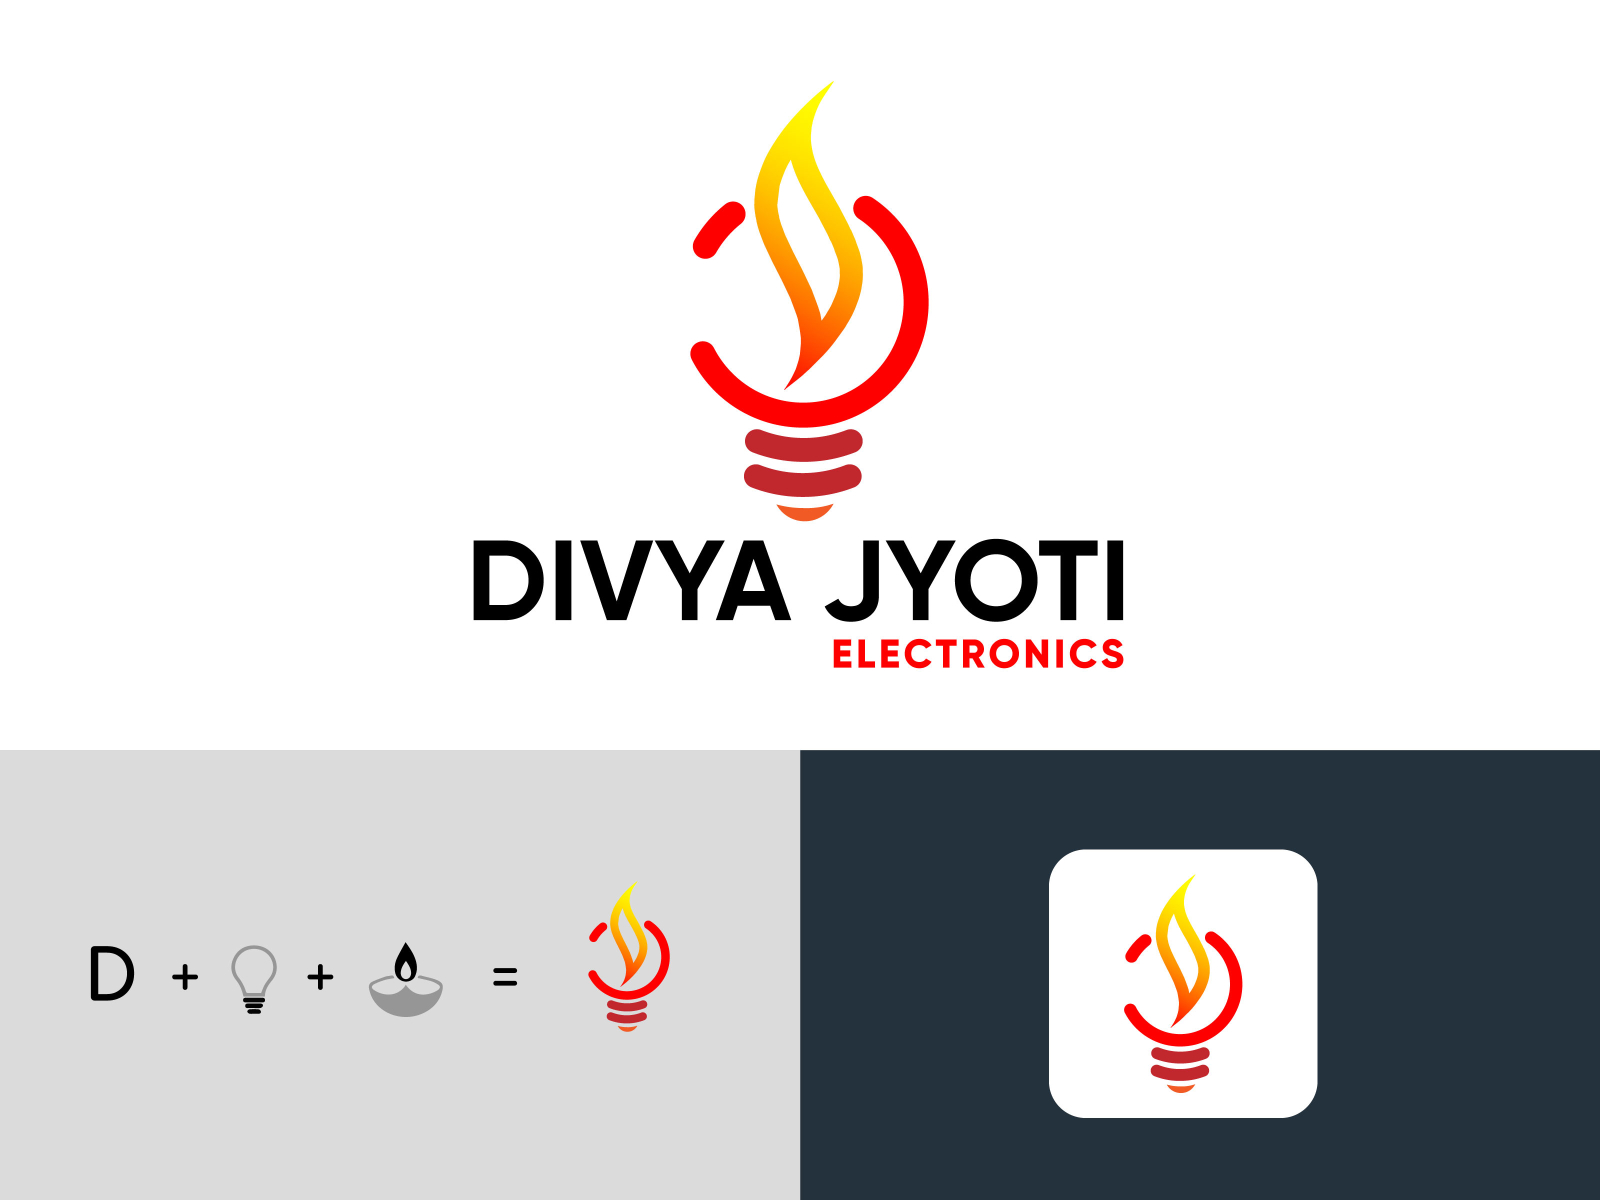 divya name logo